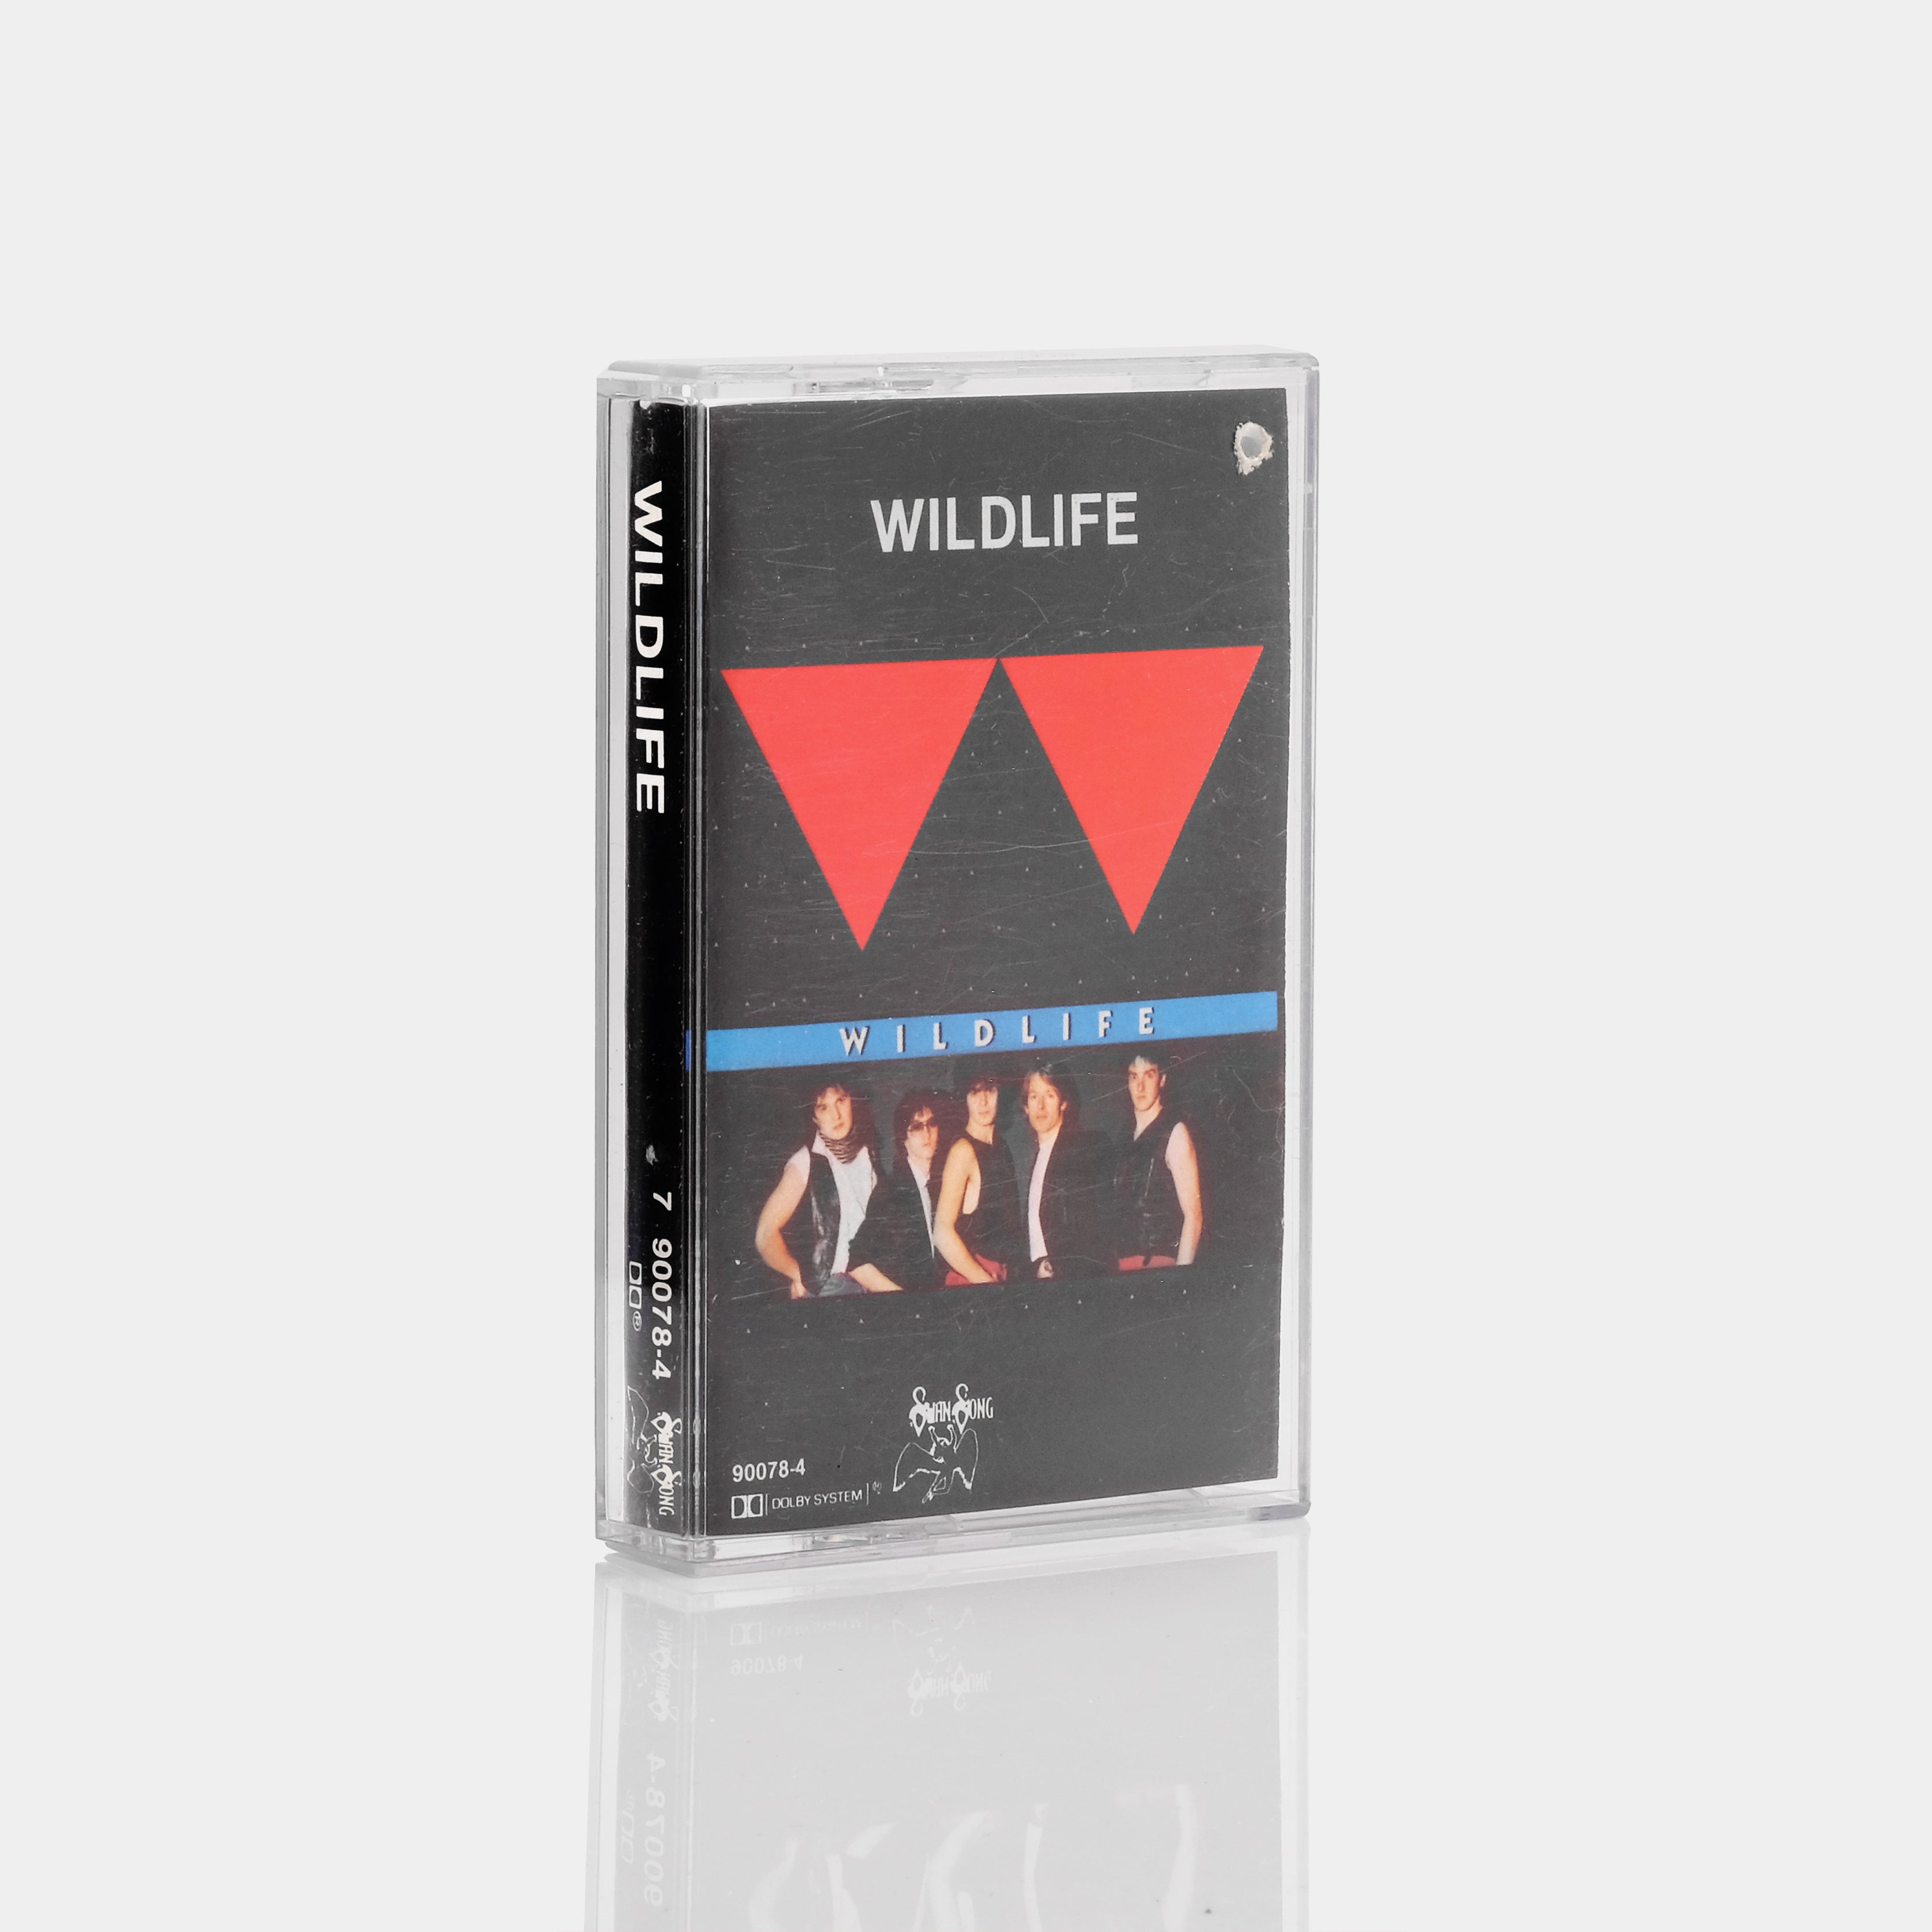 Wildlife - Wildlife Cassette Tape